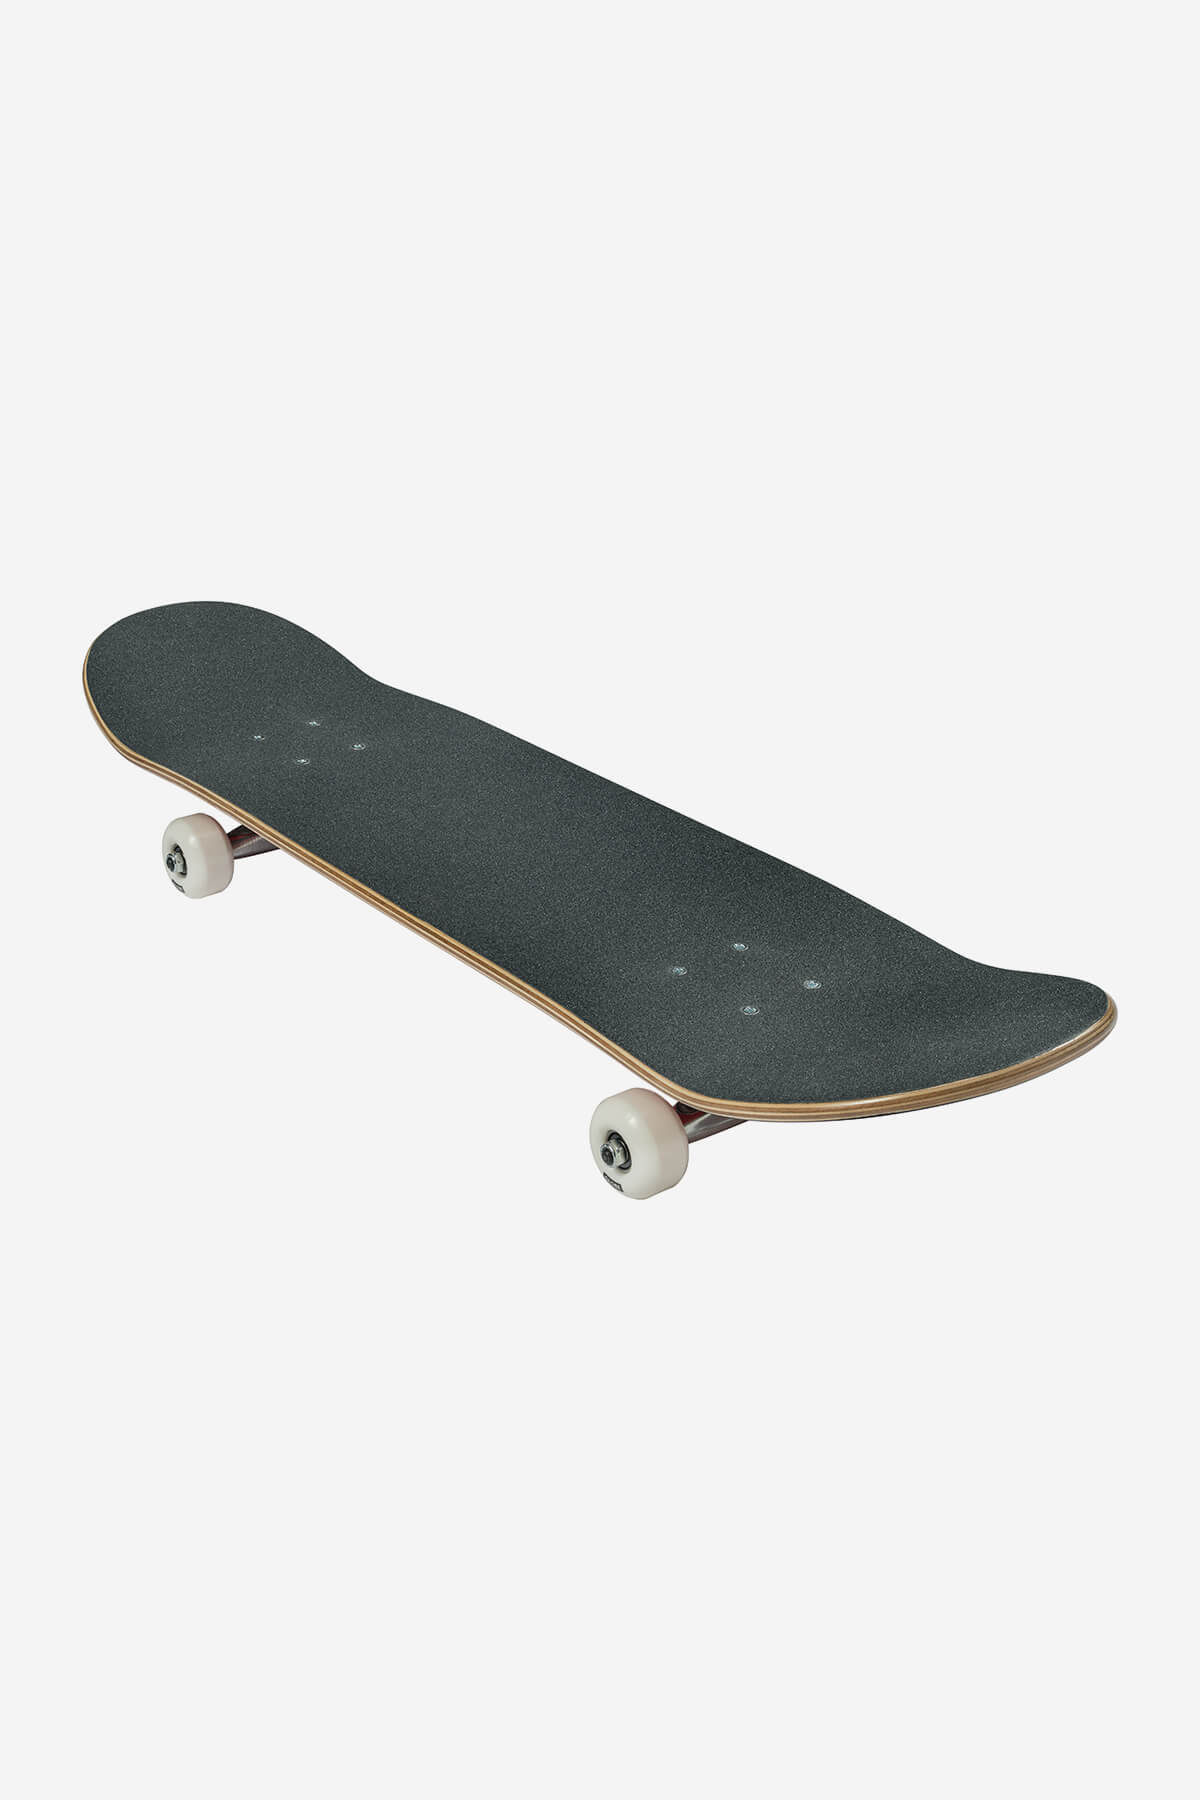 Globe - G0 Fubar - Nero/Red - 7,75" completo Skateboard